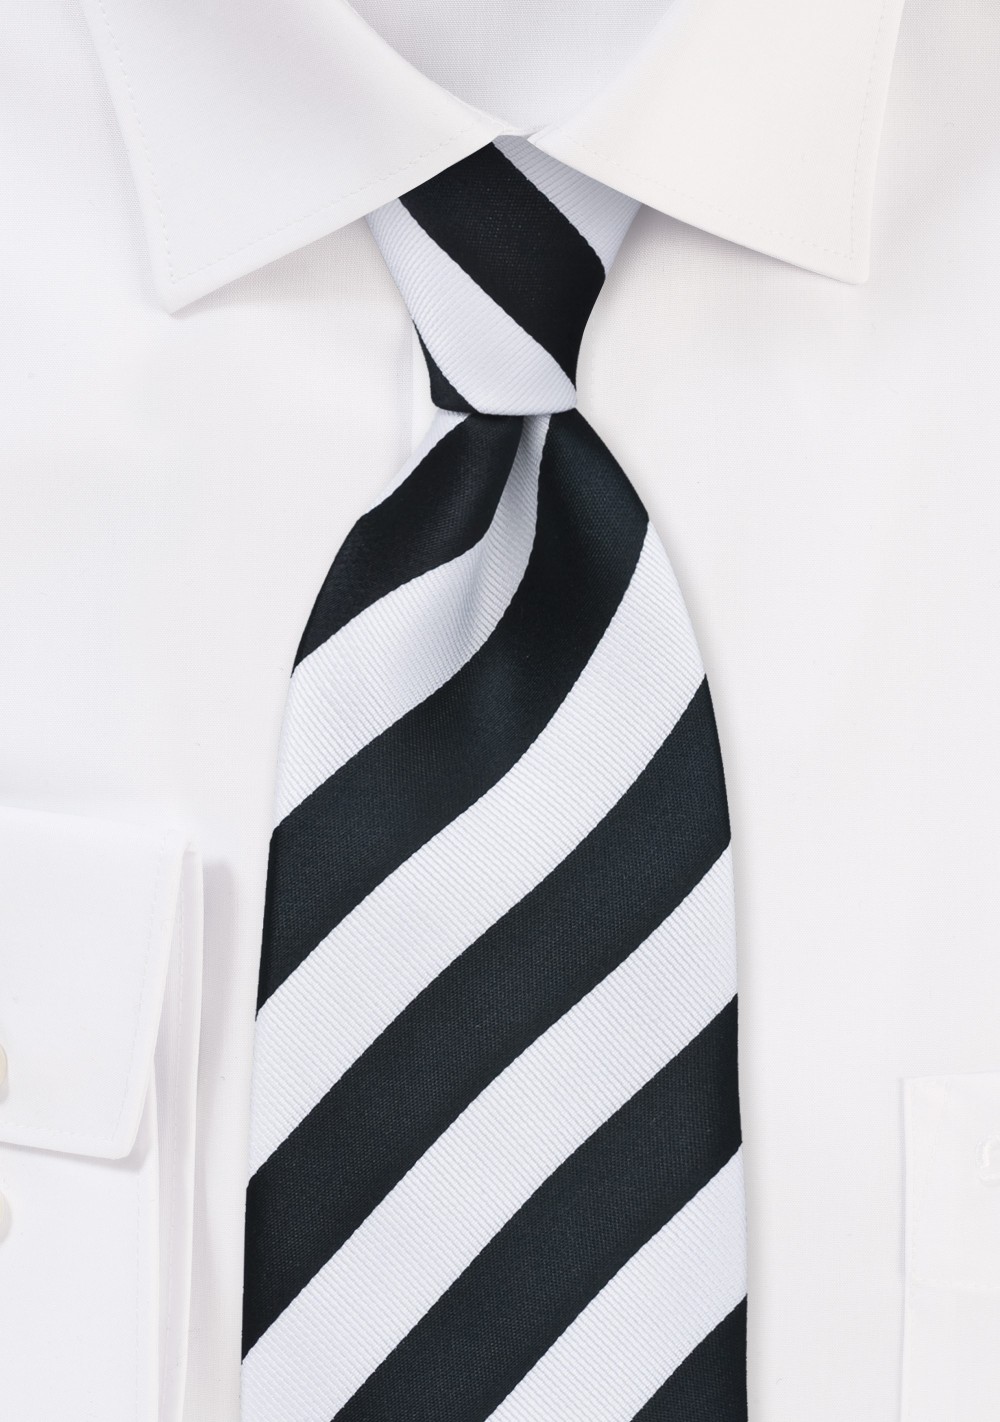 Classic Black and White Tie